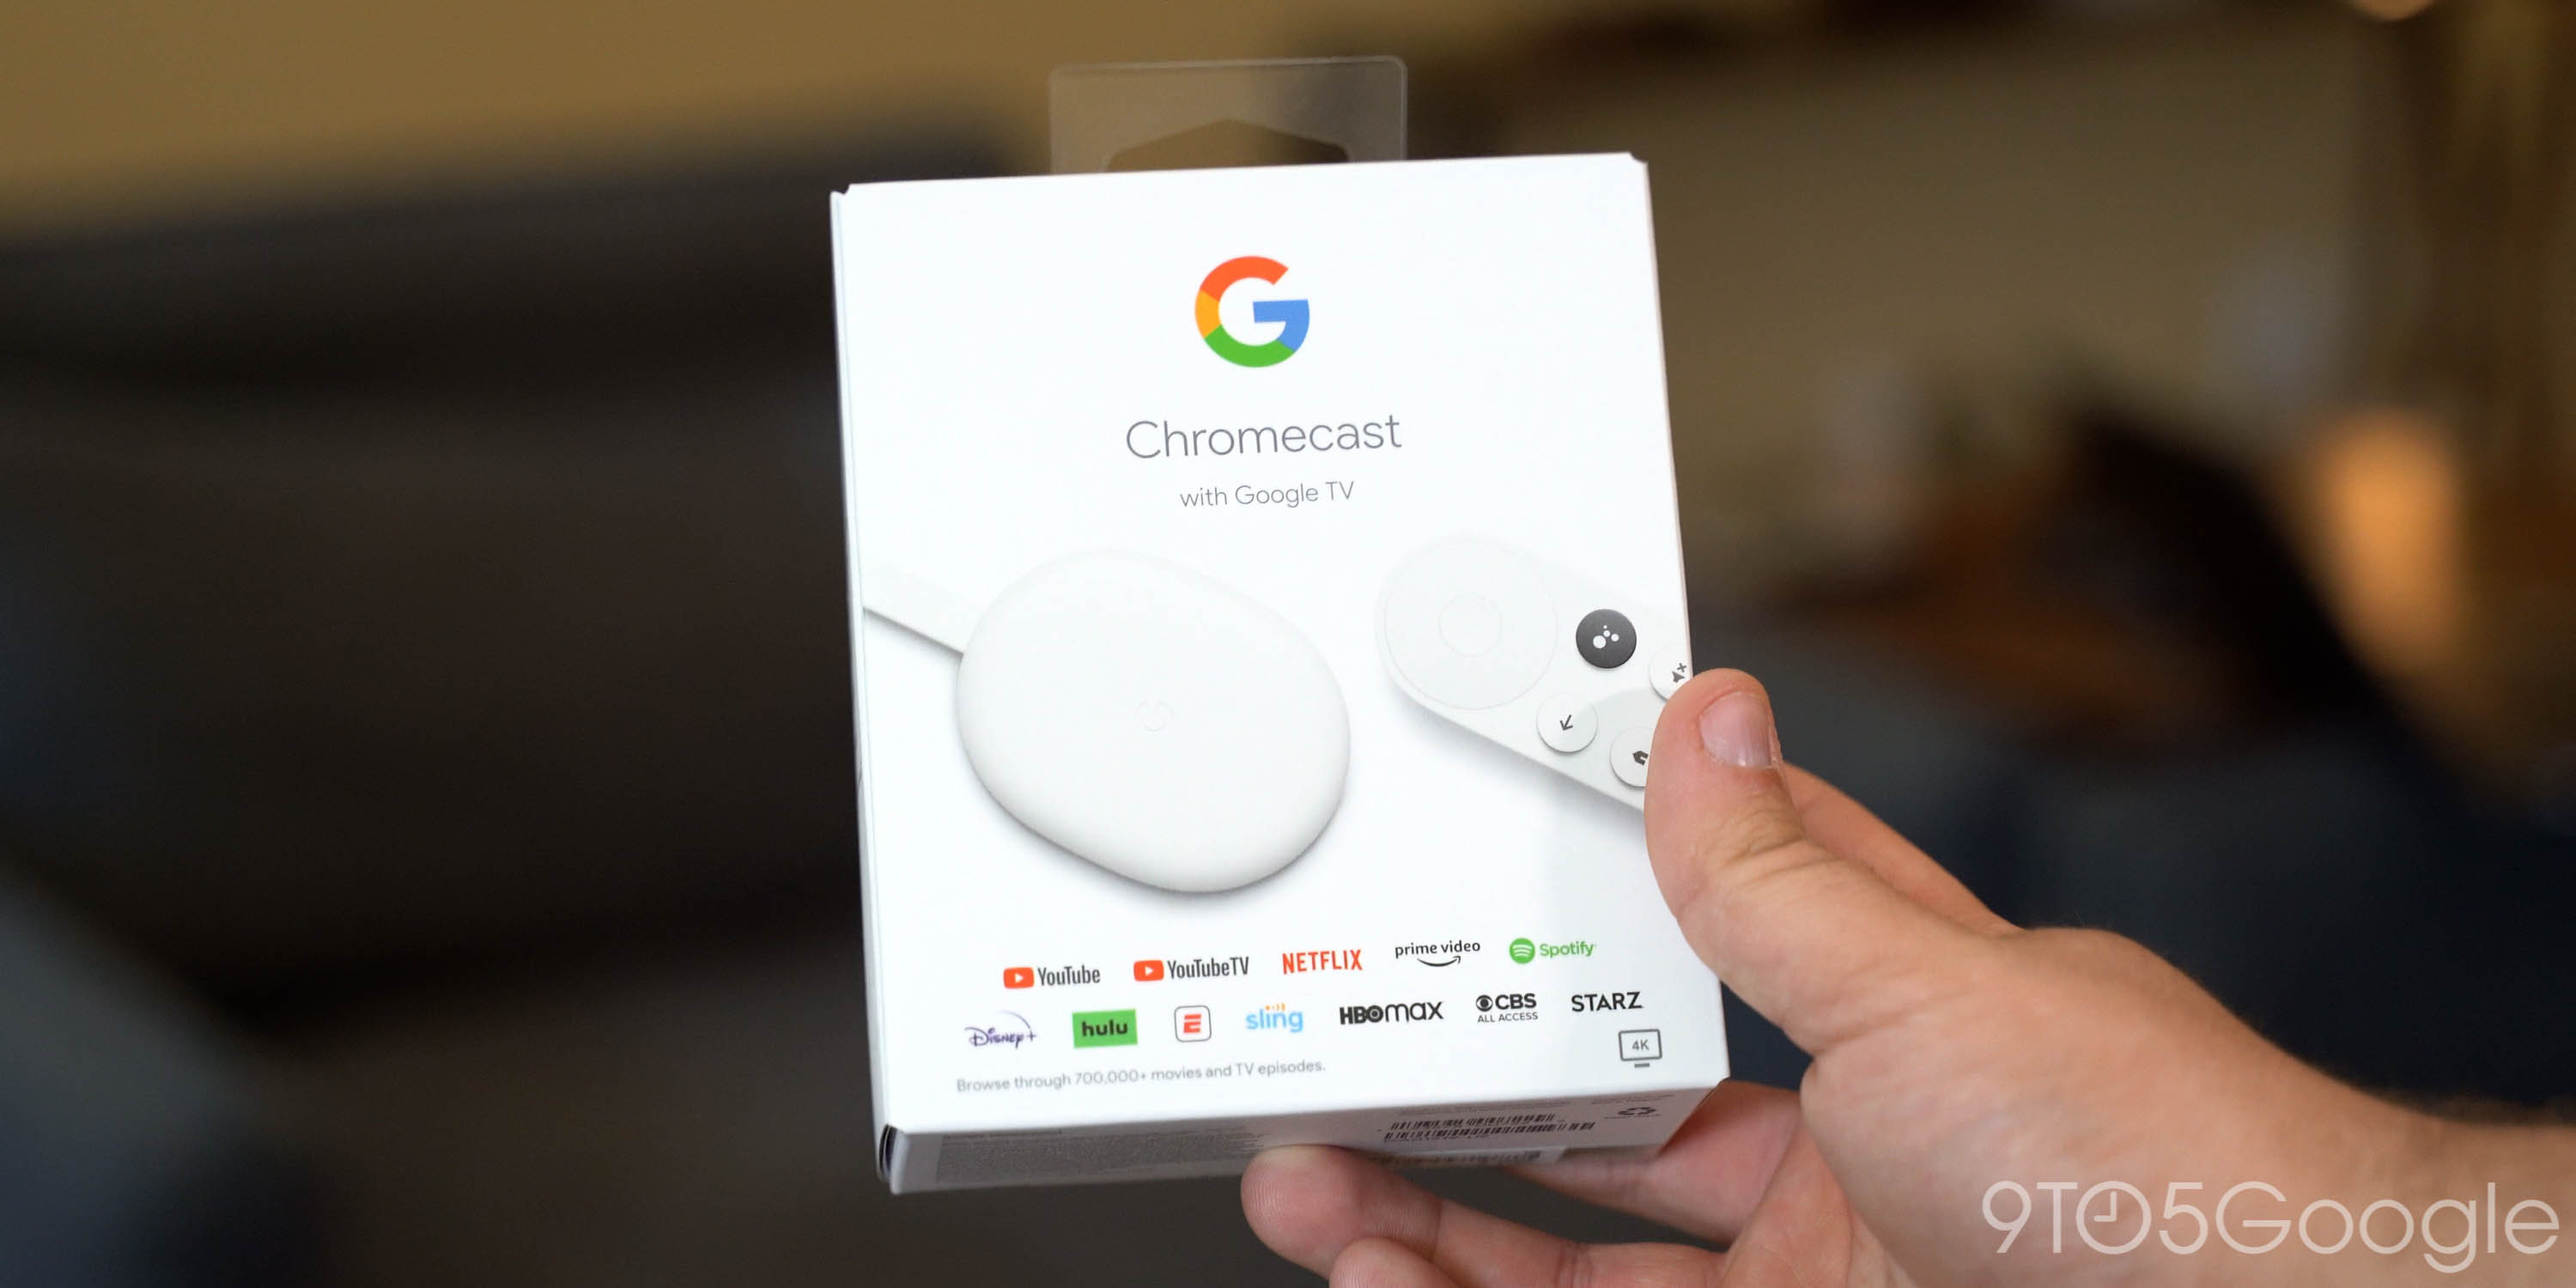 google chromecast with google tv keeps zing